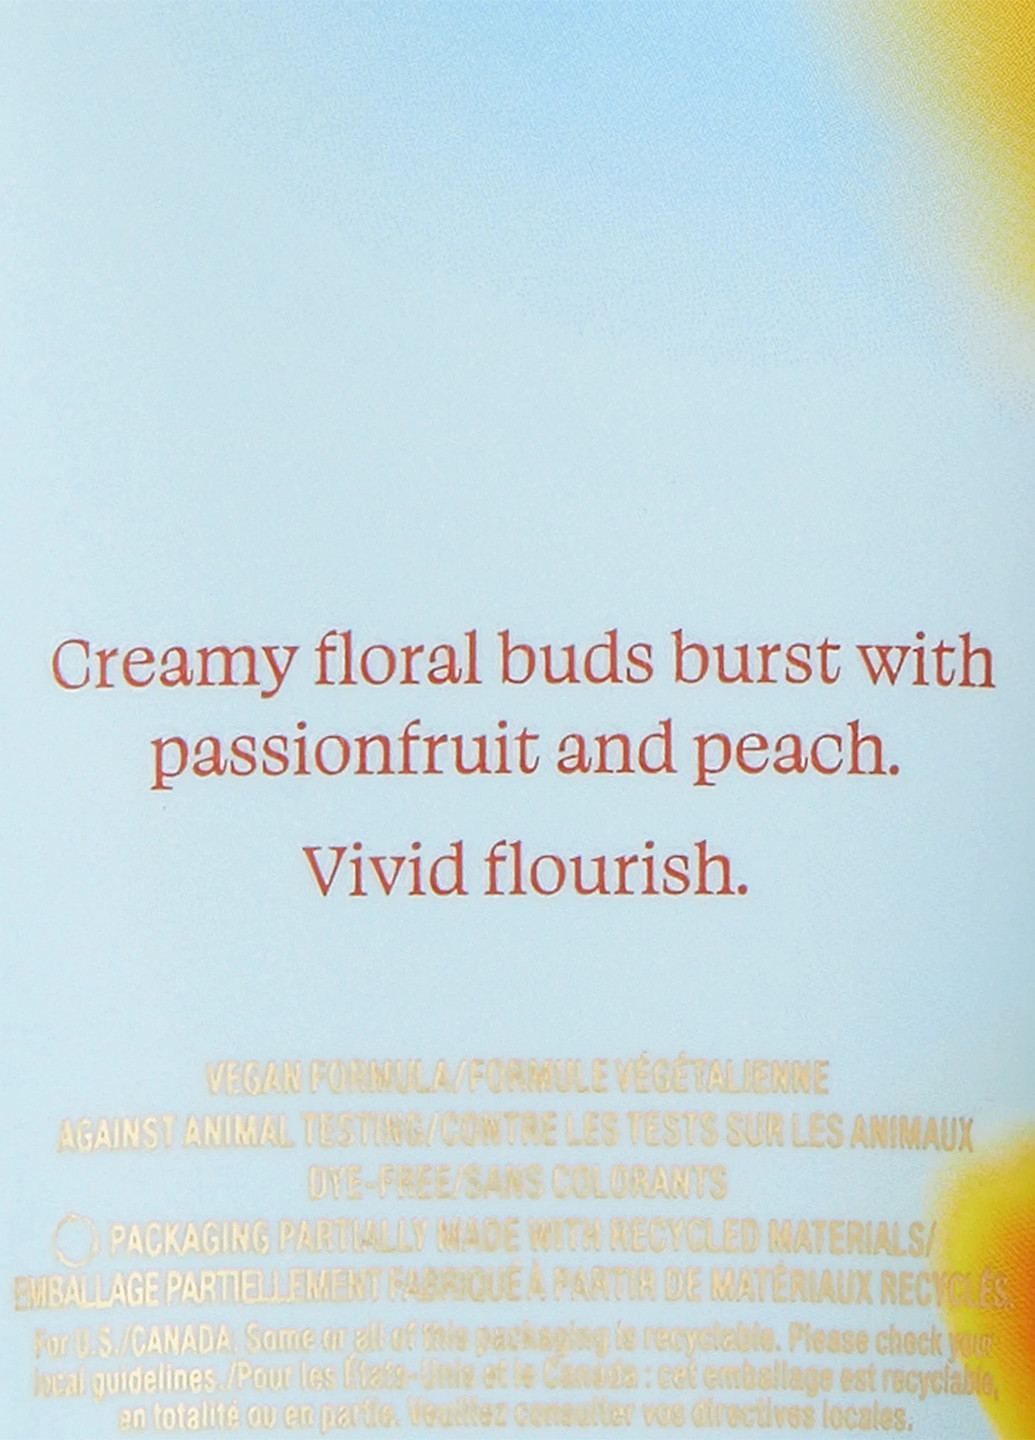 Набір Vibrant Blooming Passionfruit (лосьон, міст), 236 мл/250 мл Victoria's Secret (289787231)